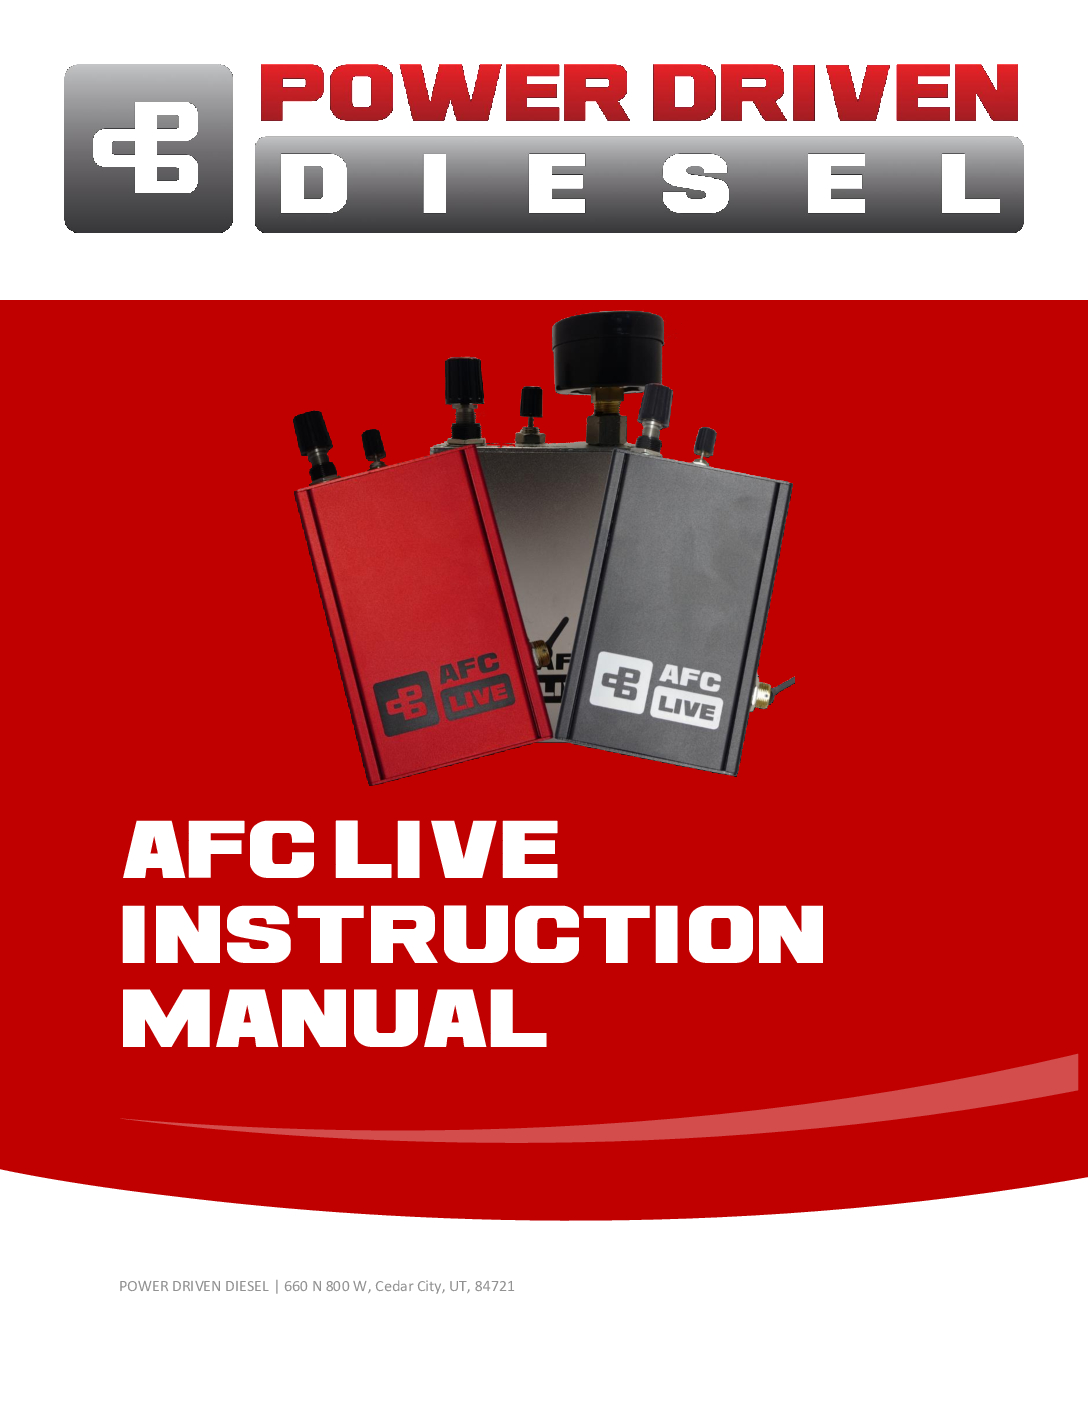 AFC LIVE instruction manual